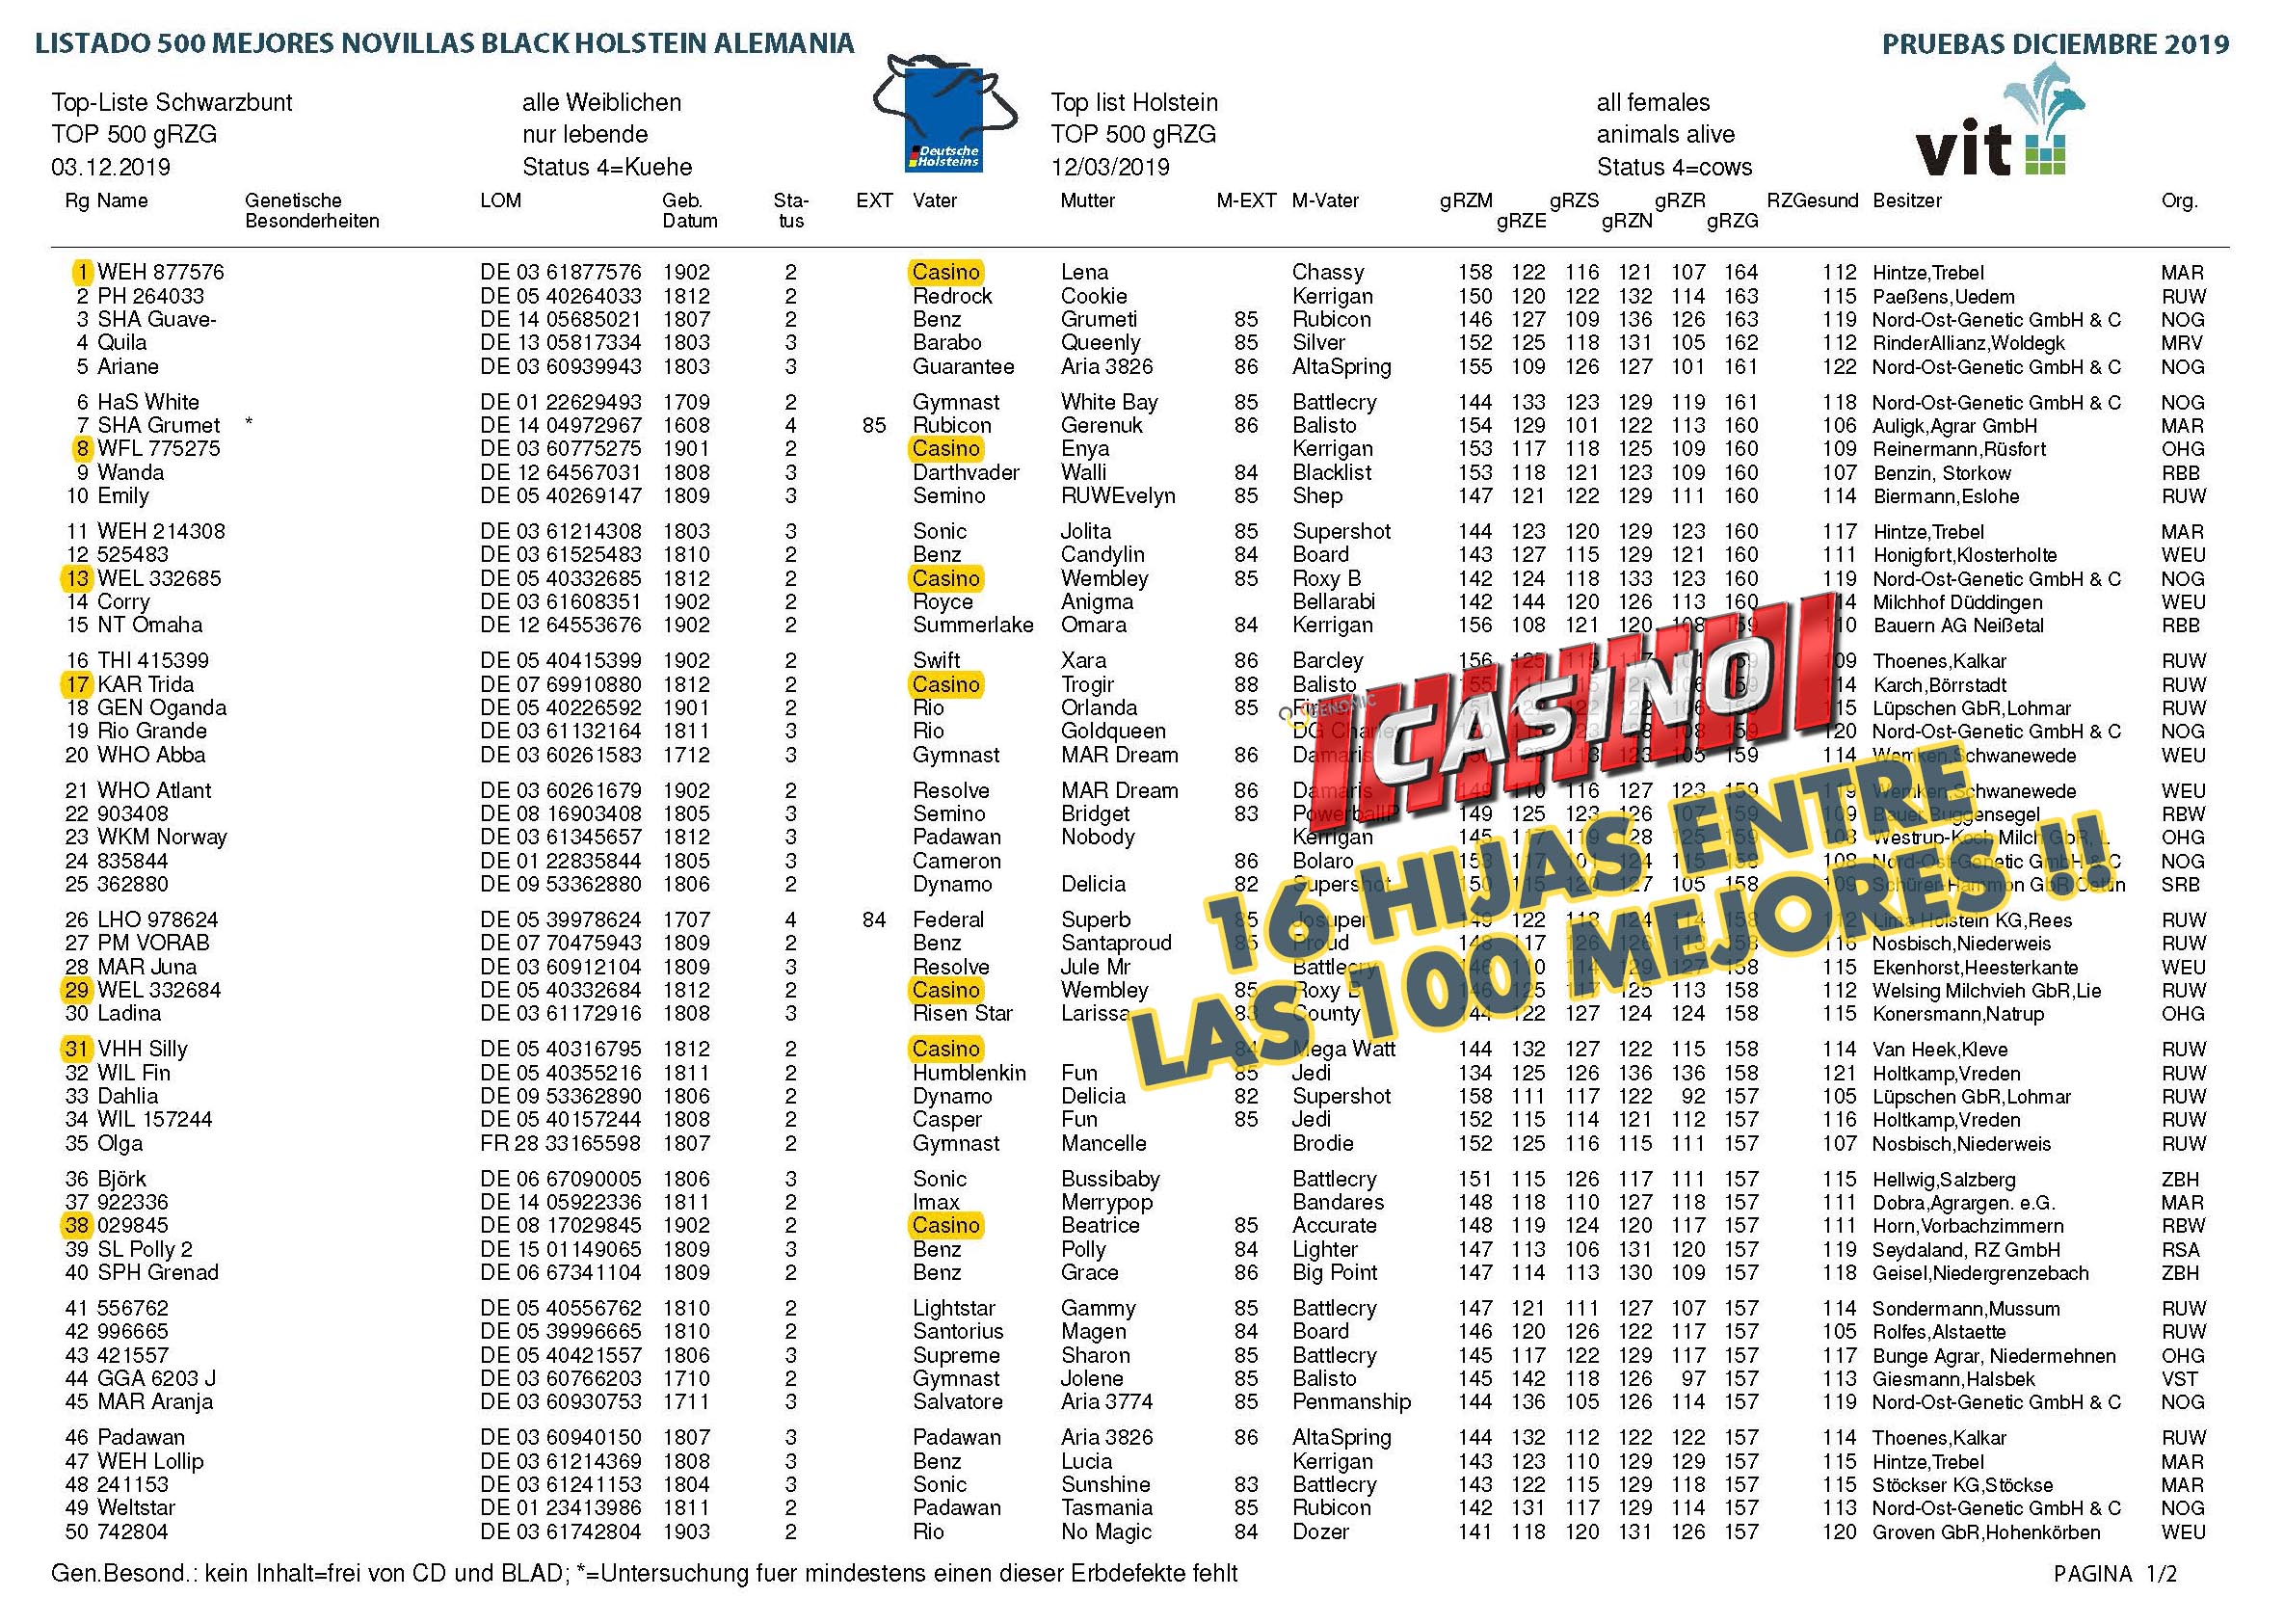 BAS·GGI - CASINIO - 16 hijas entre las 100 mejores · GGI-SPERMEX !!